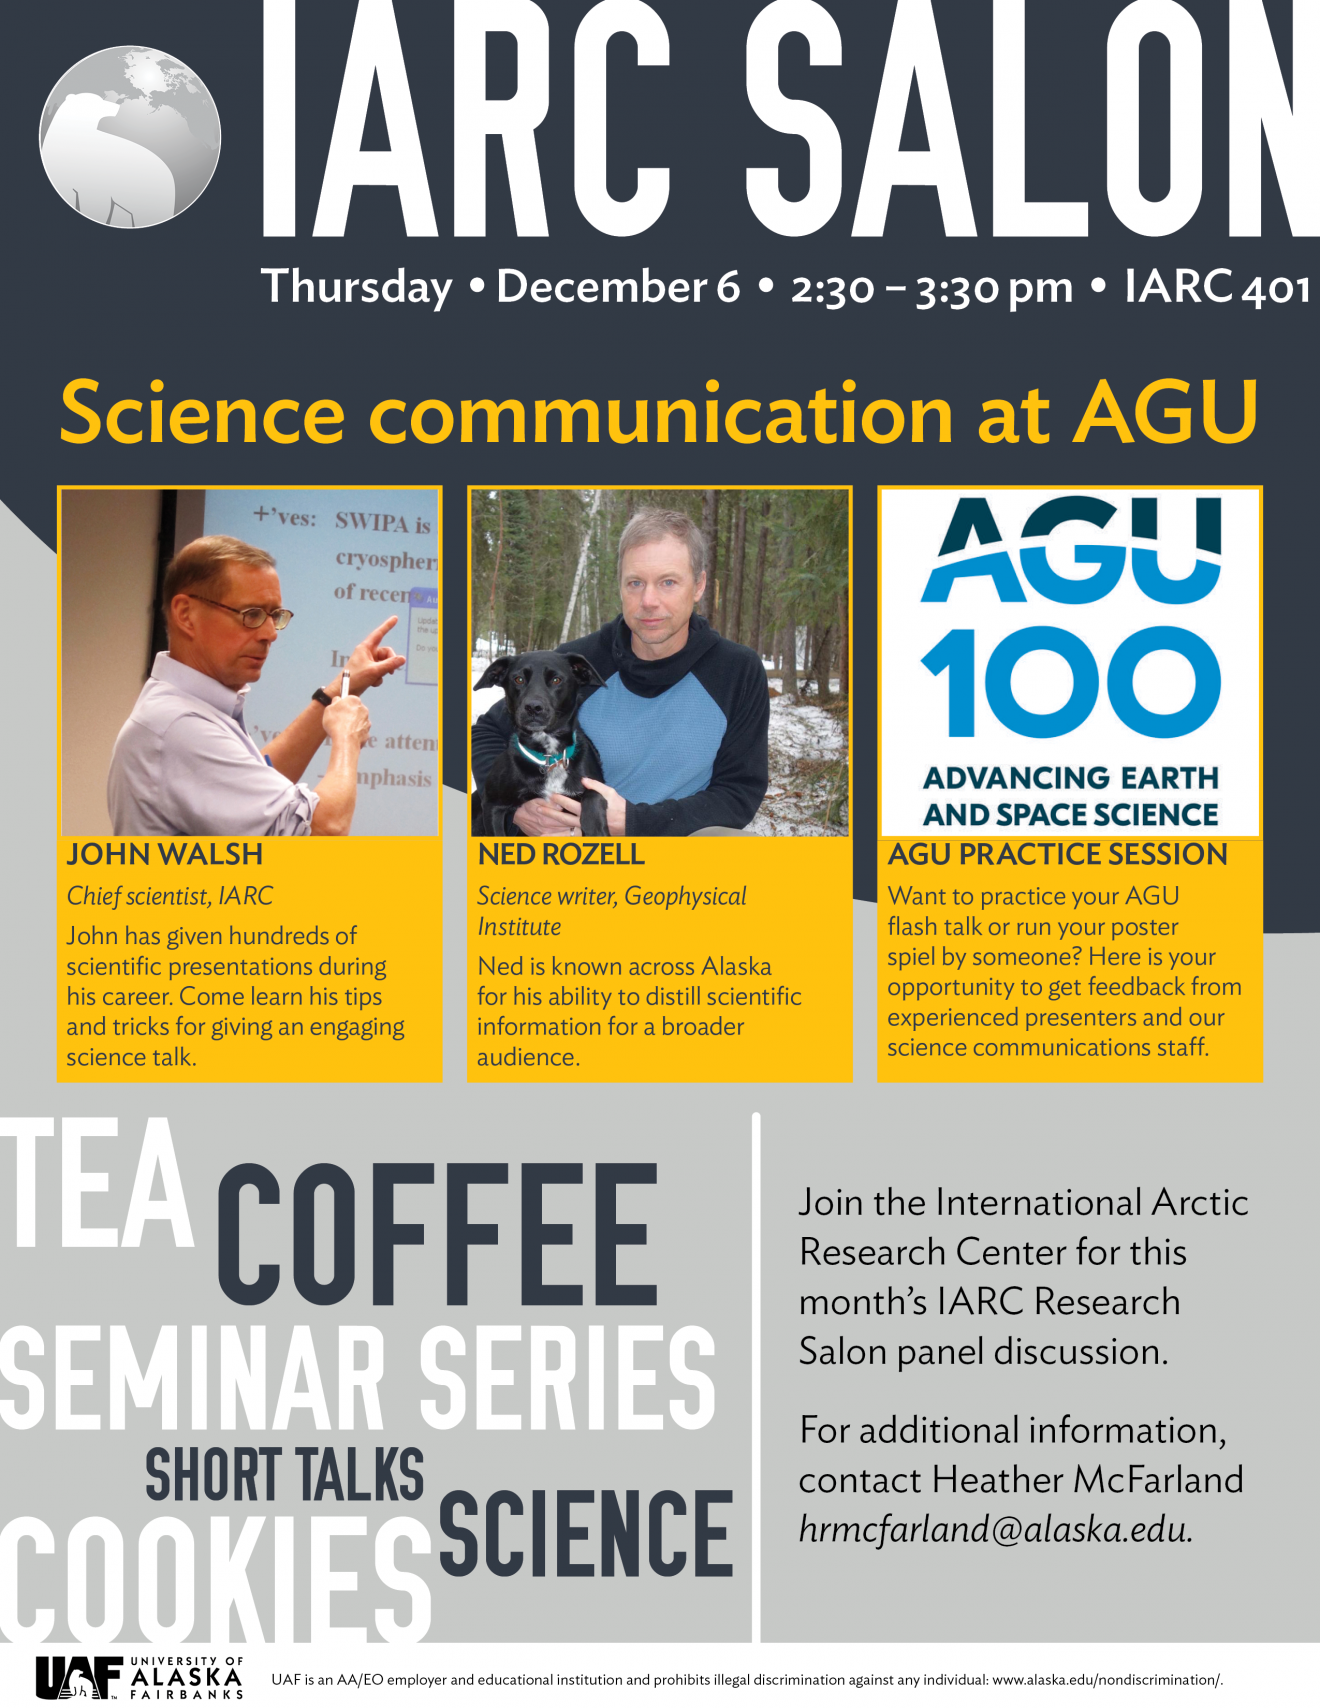 IARC Salon: Science Communication at AGU